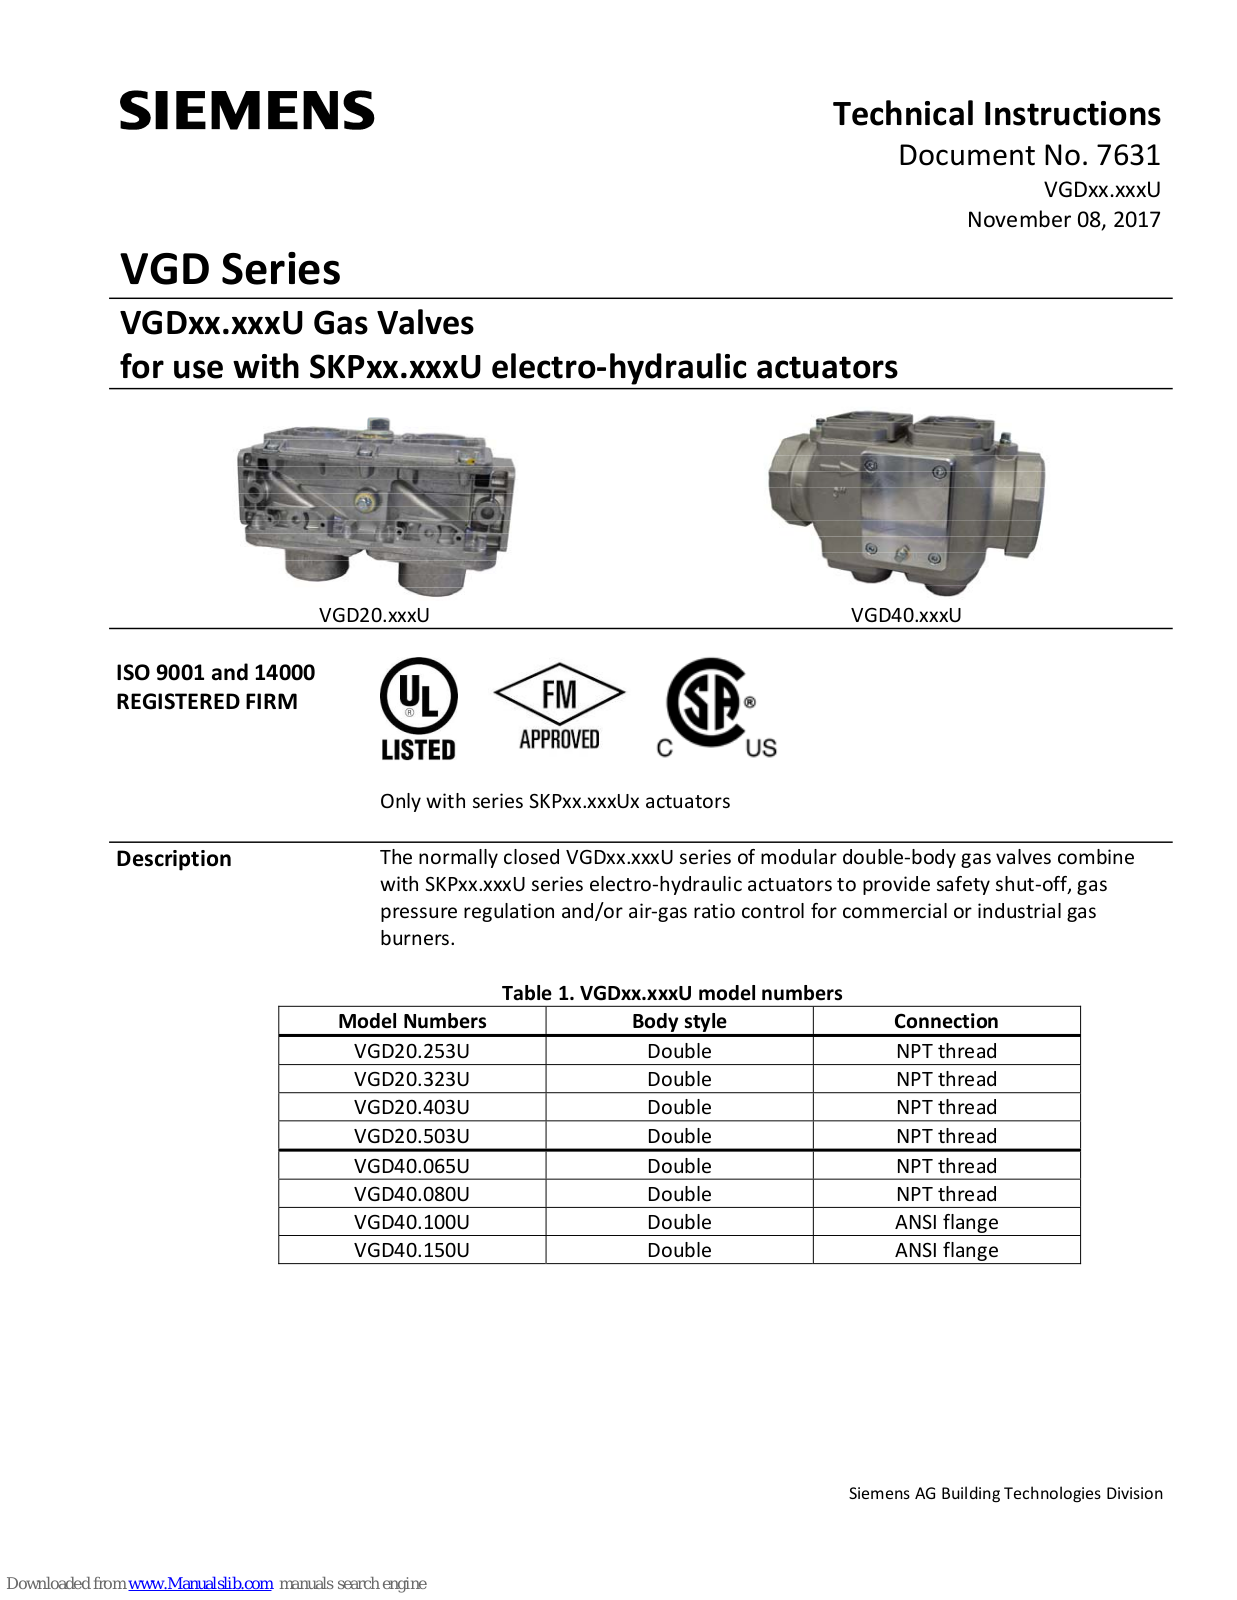 Siemens VGD20.253U, VGD Series, VGD20.323U, VGD20.403U, VGD20.503U Technical Instructions